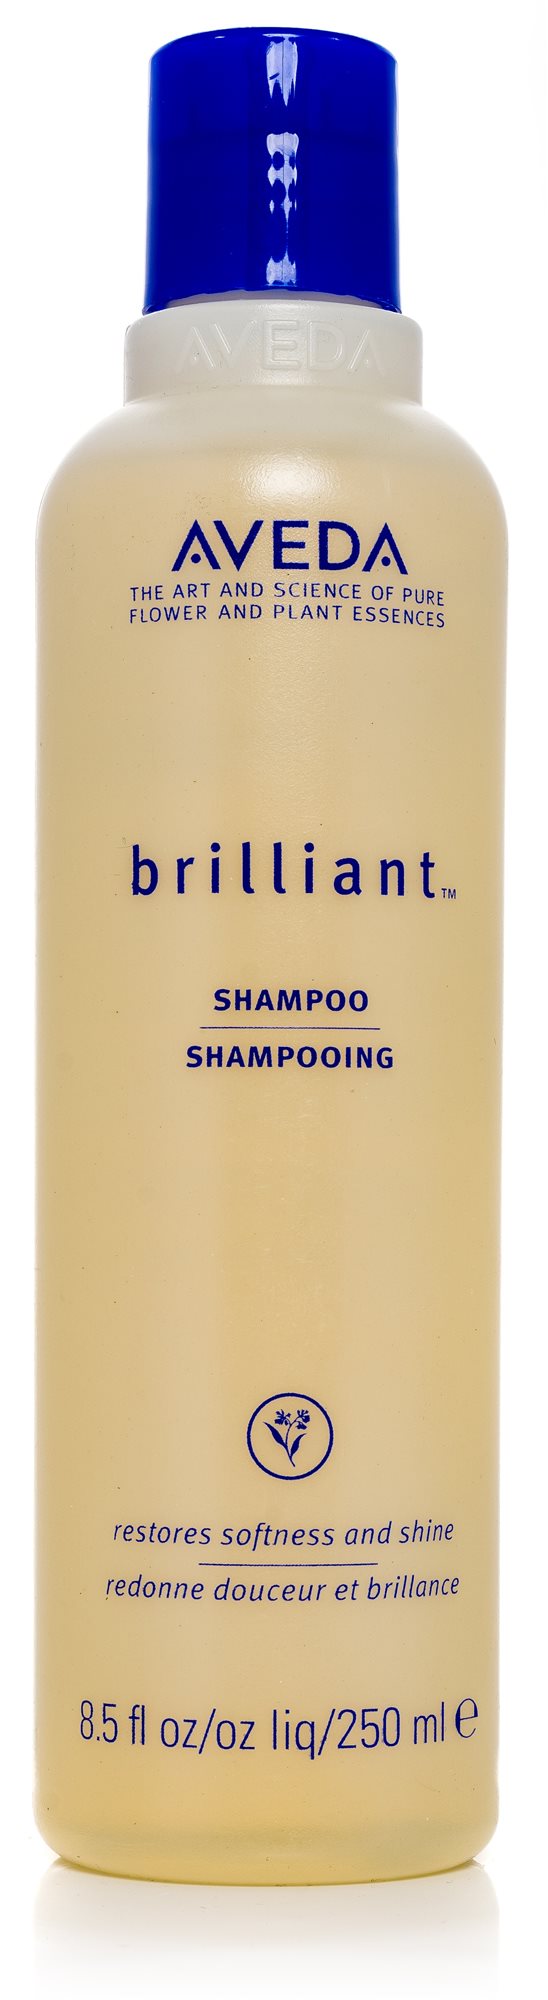 Sampon AVEDA Domain Brilliant Shampoo 250 ml